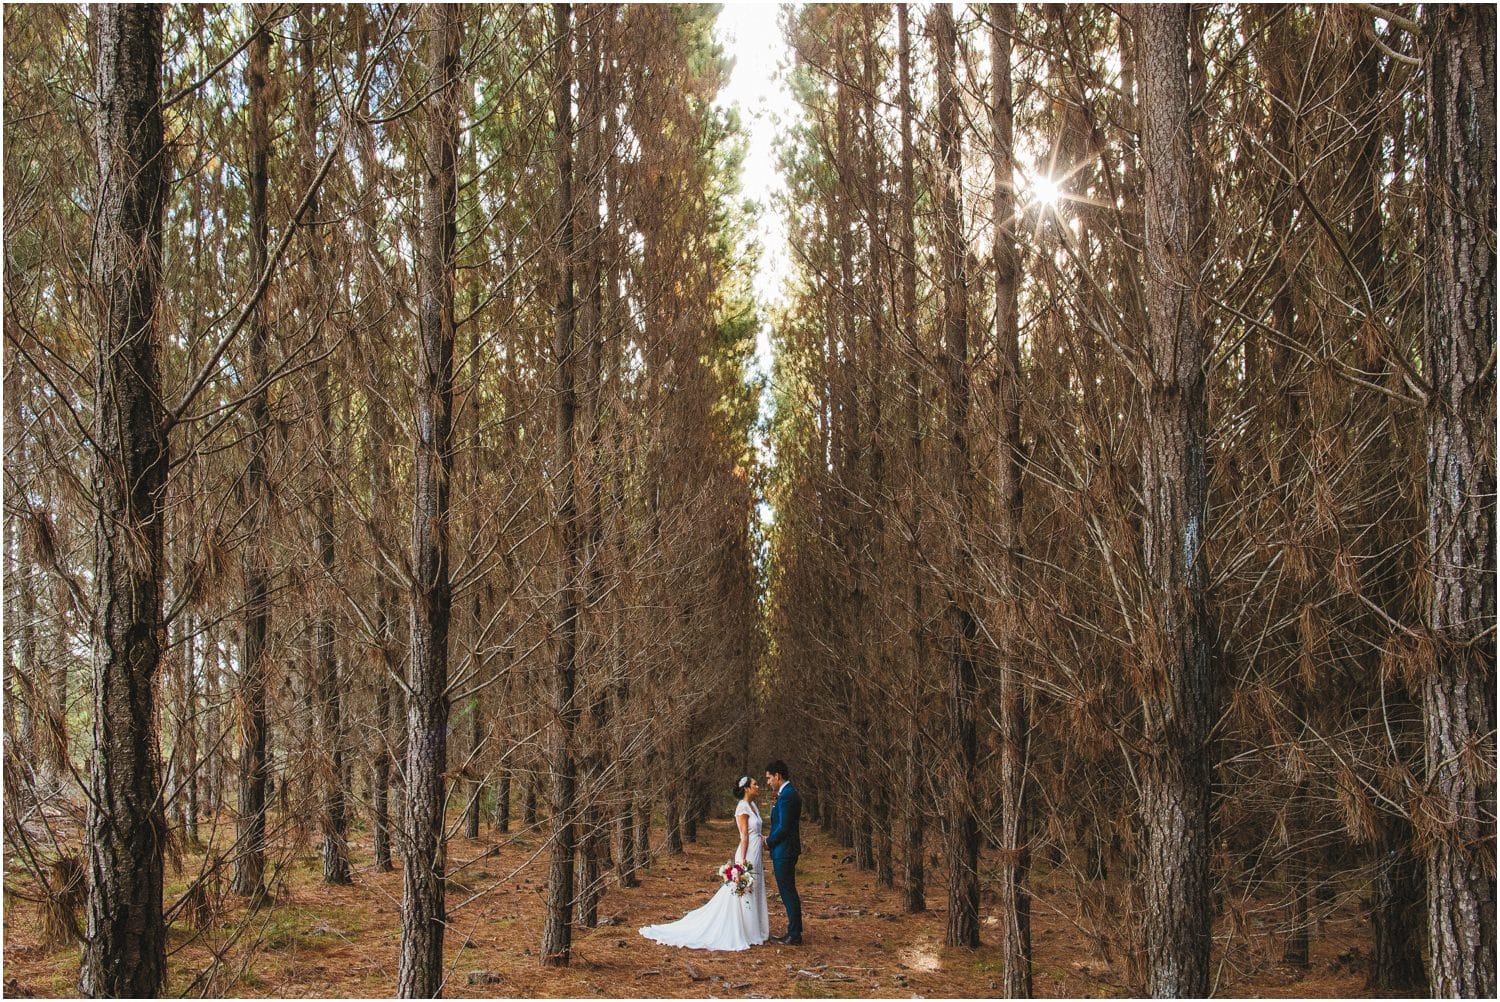 Eling Forest Wedding Photos  |  Sheung-Yi + Tim